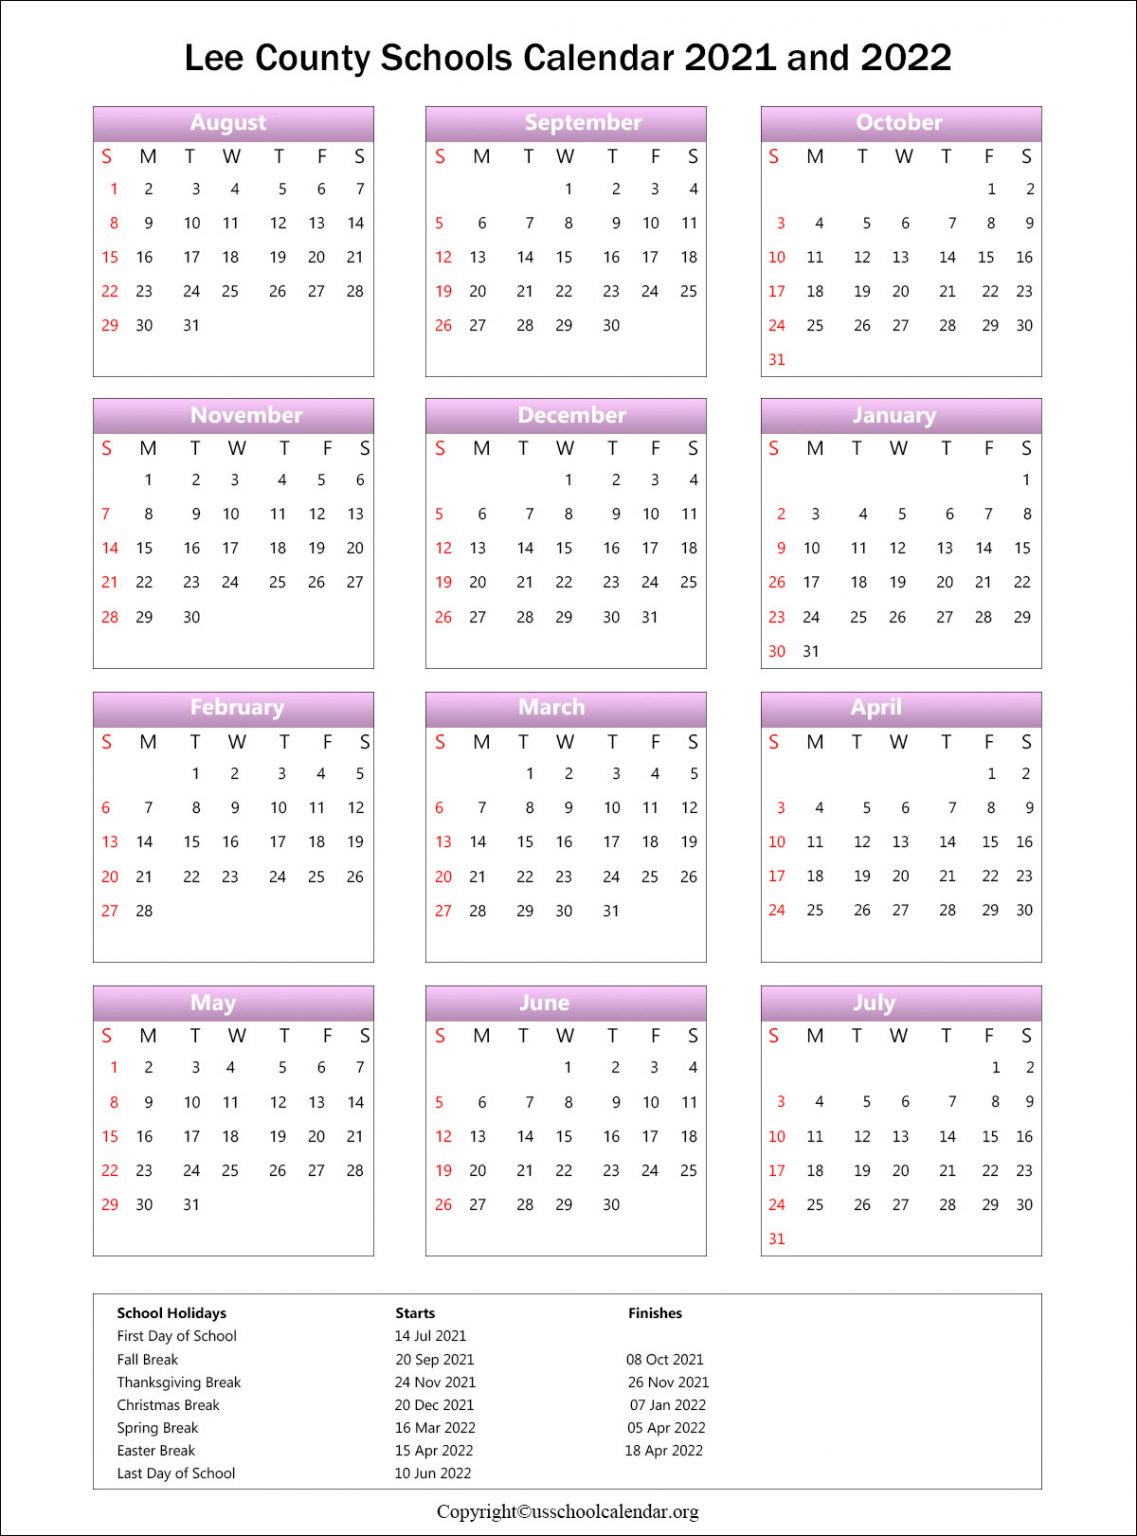 lee-county-school-calendar-with-holidays-2021-2022